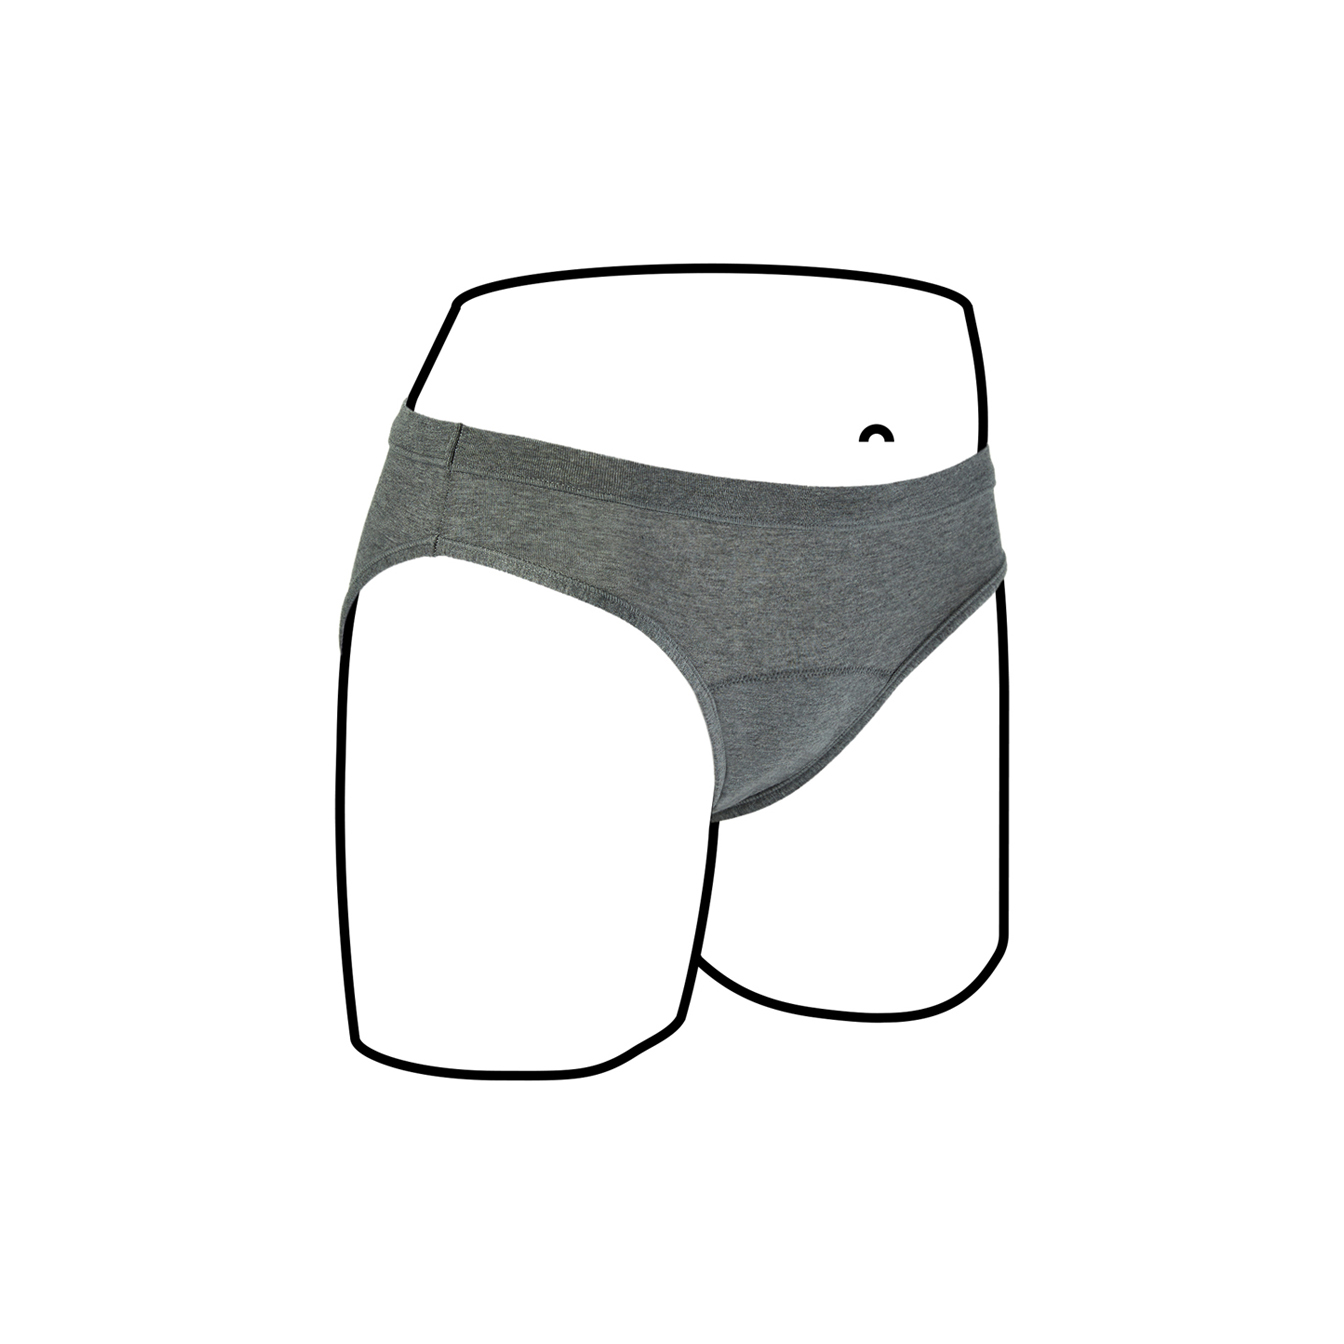 Thinx Teen's 3pc Classic Combo Briefs Period Underwear - Black/Blue/Gray  13/14